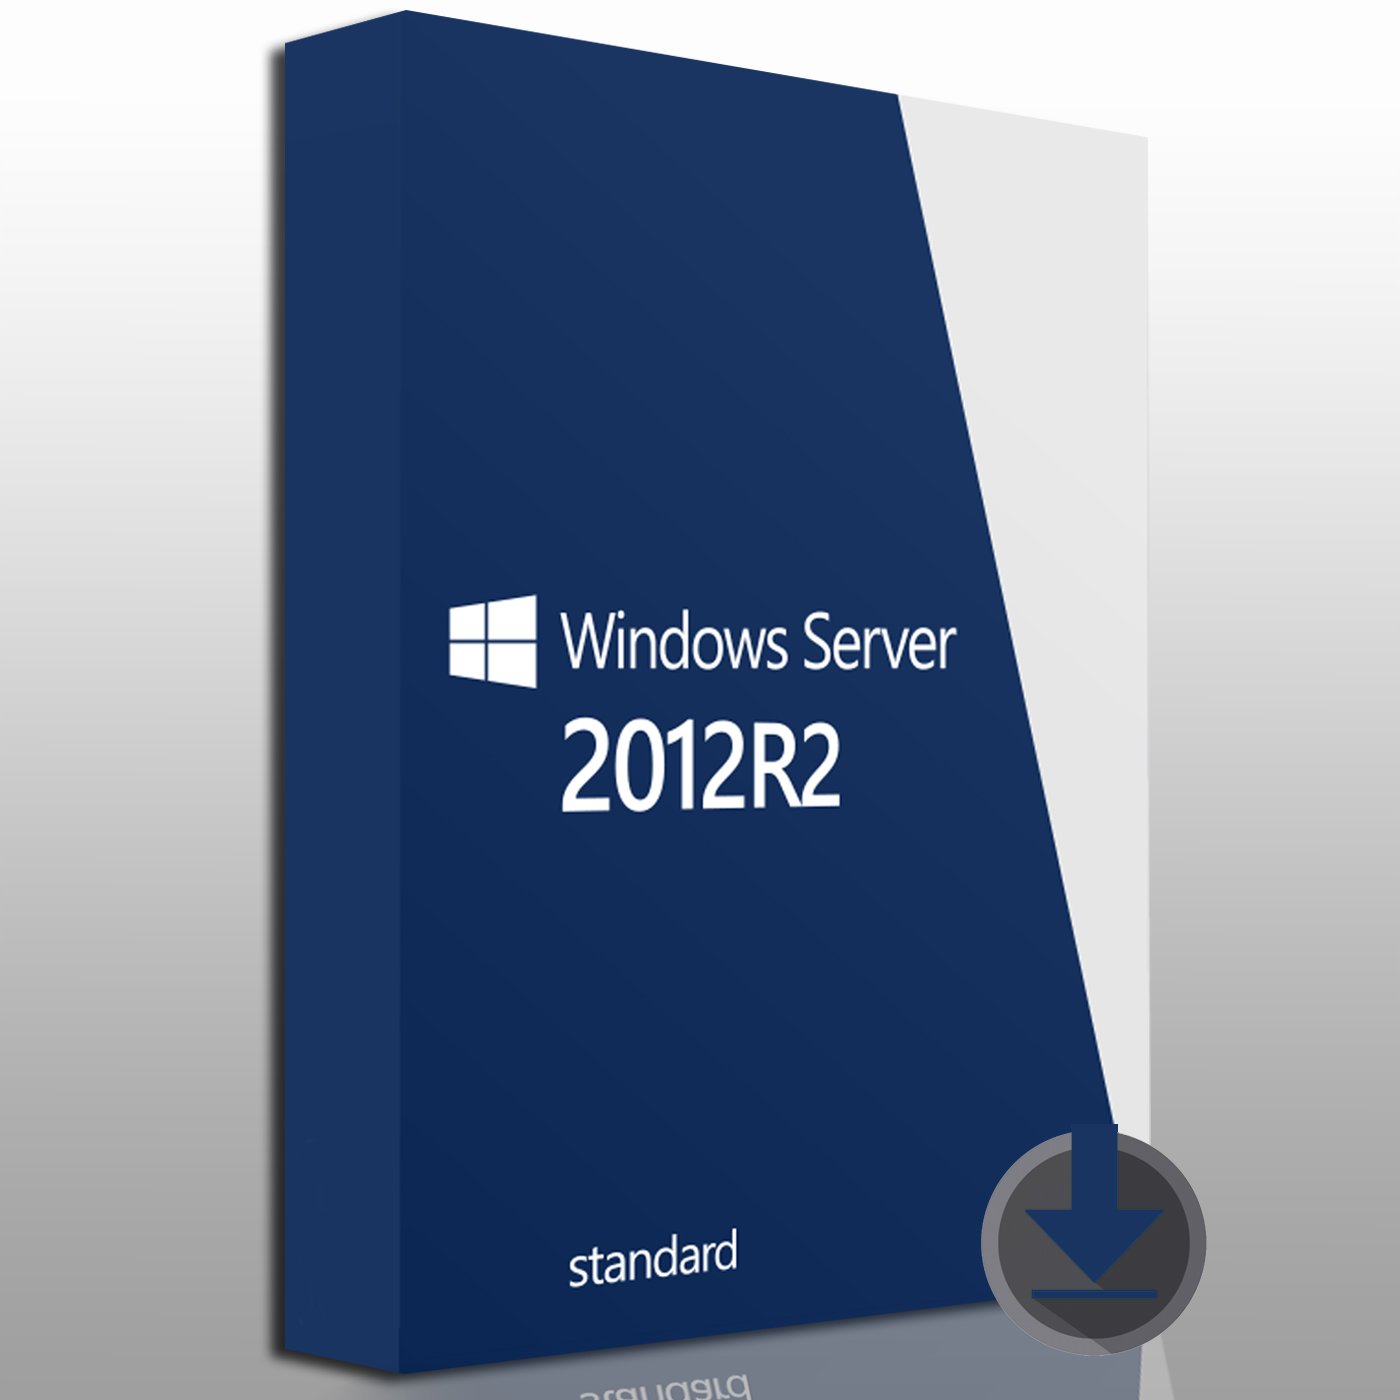 windows server 2012 r2 standard license cost